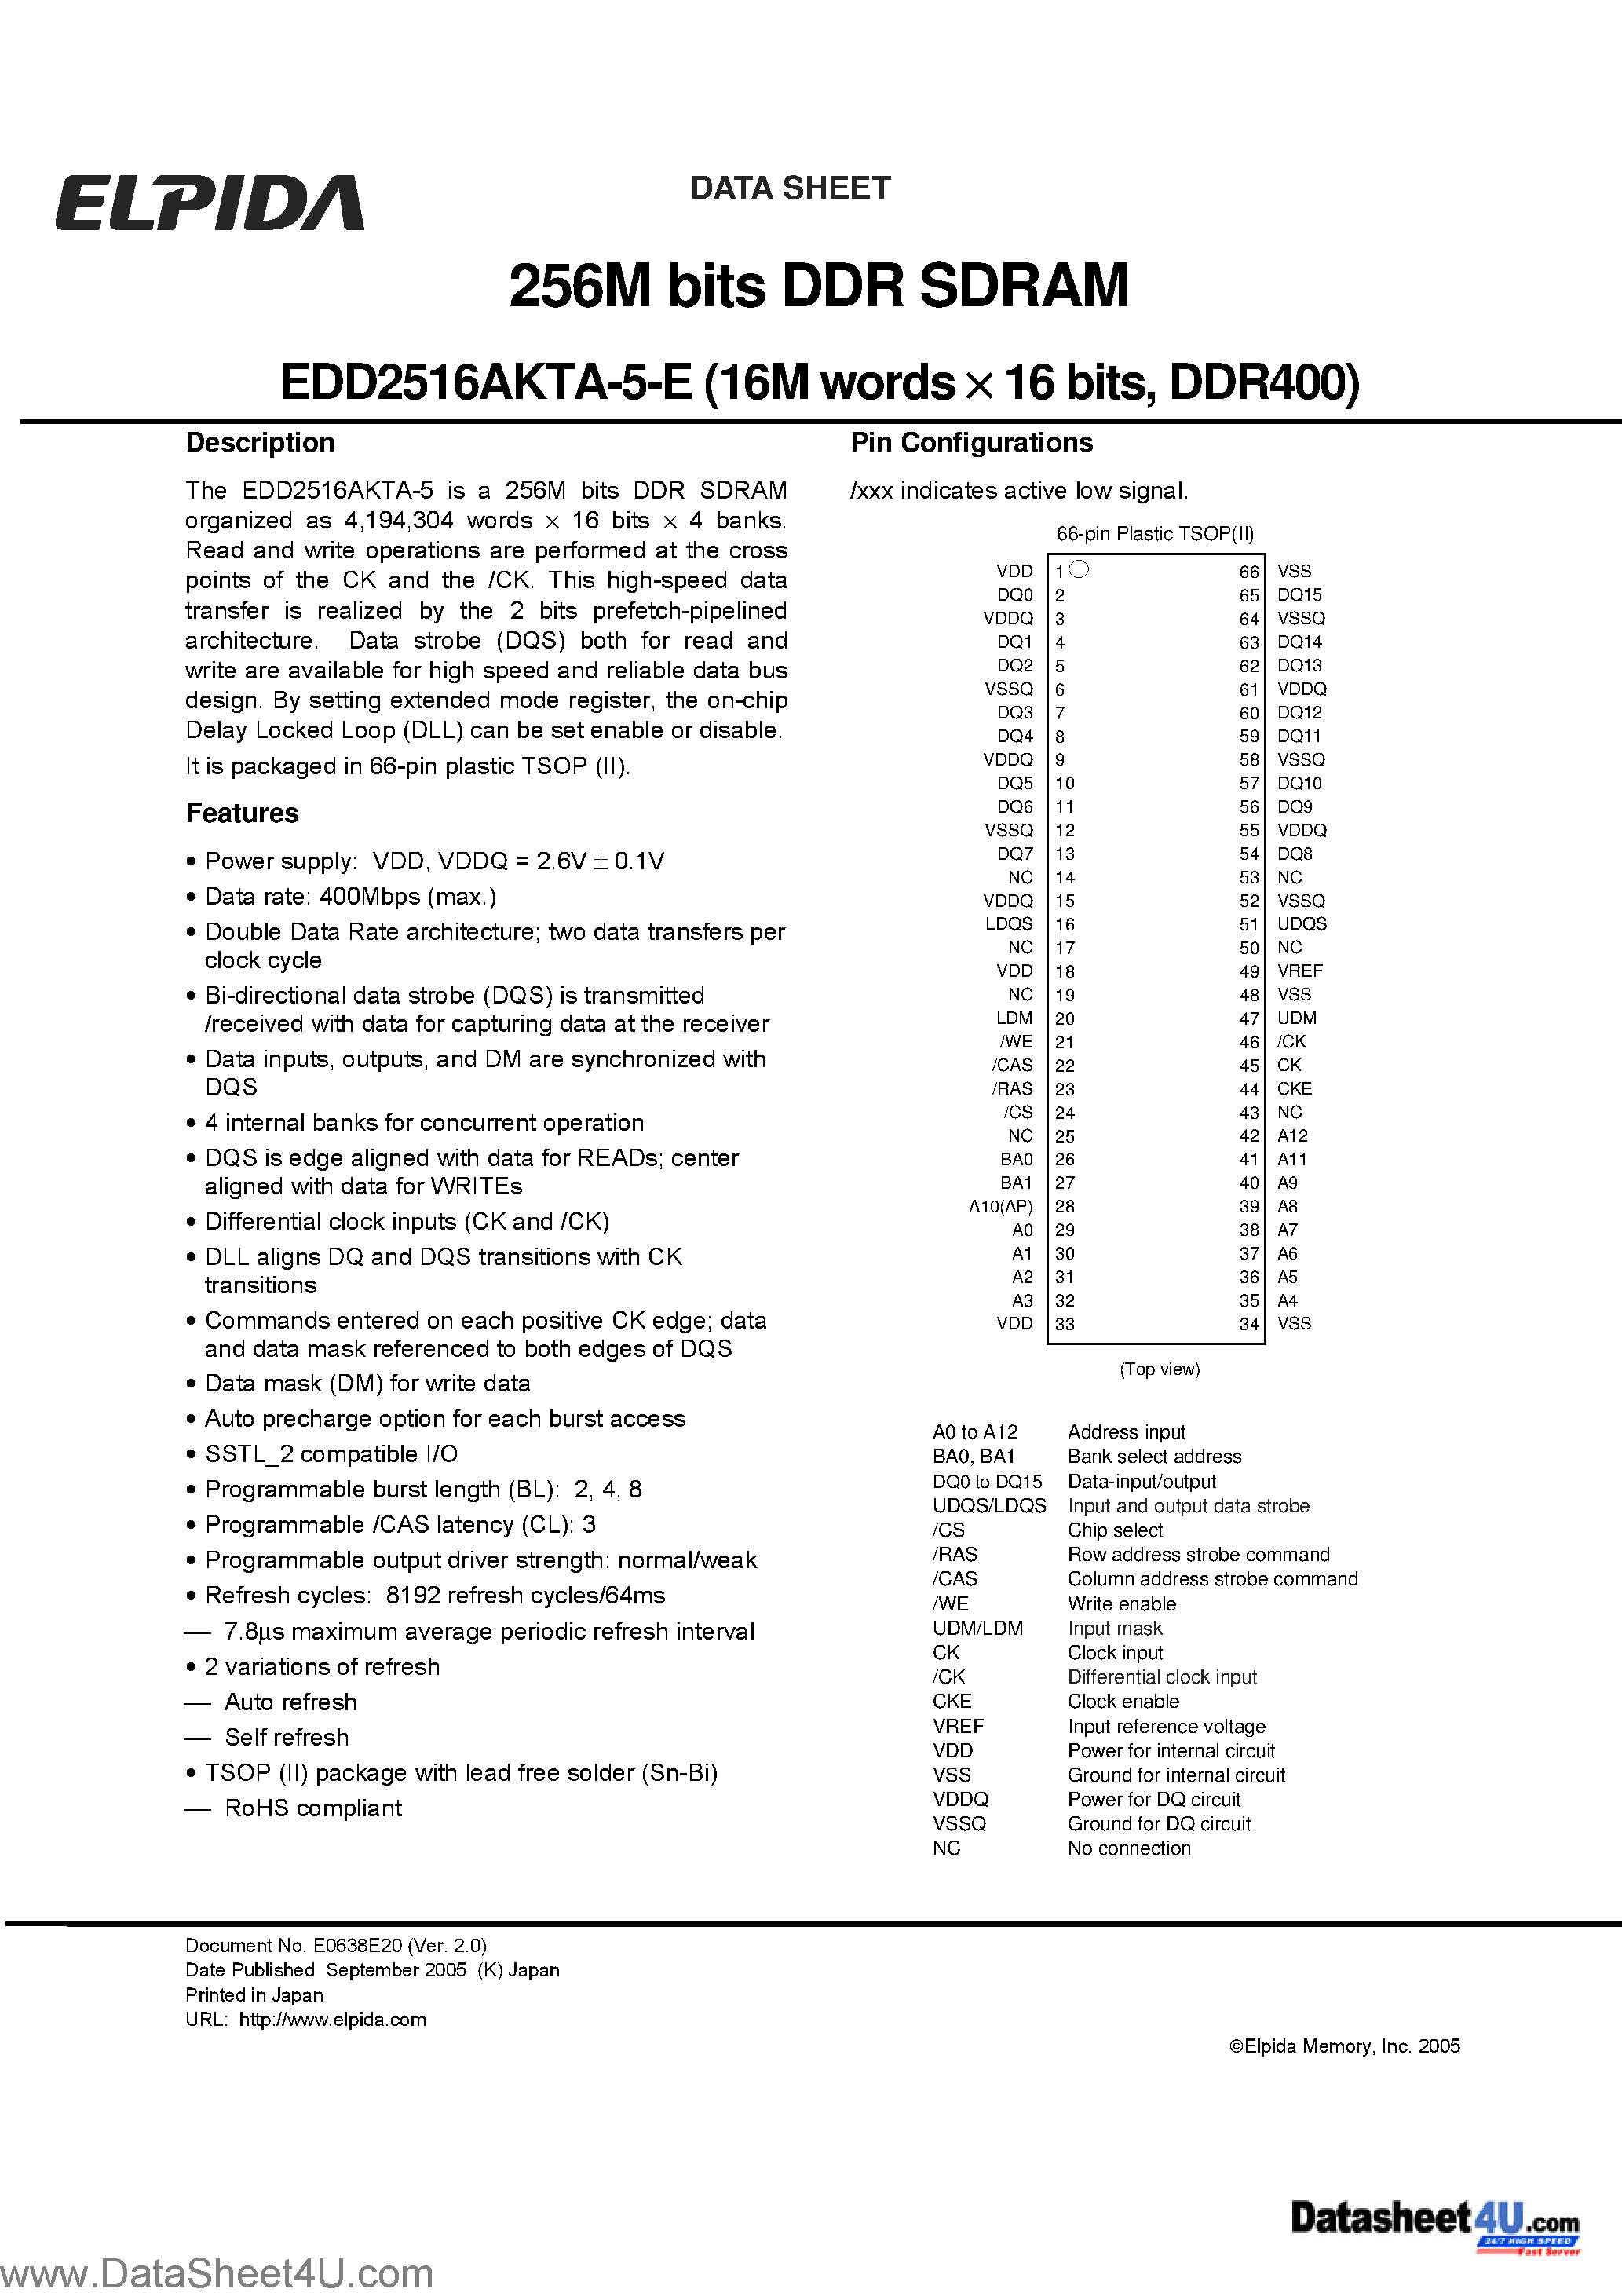 Datasheet EDD2516AKTA-5-E - 256M bits DDR SDRAM (16M words x16 bits DDR400) page 1